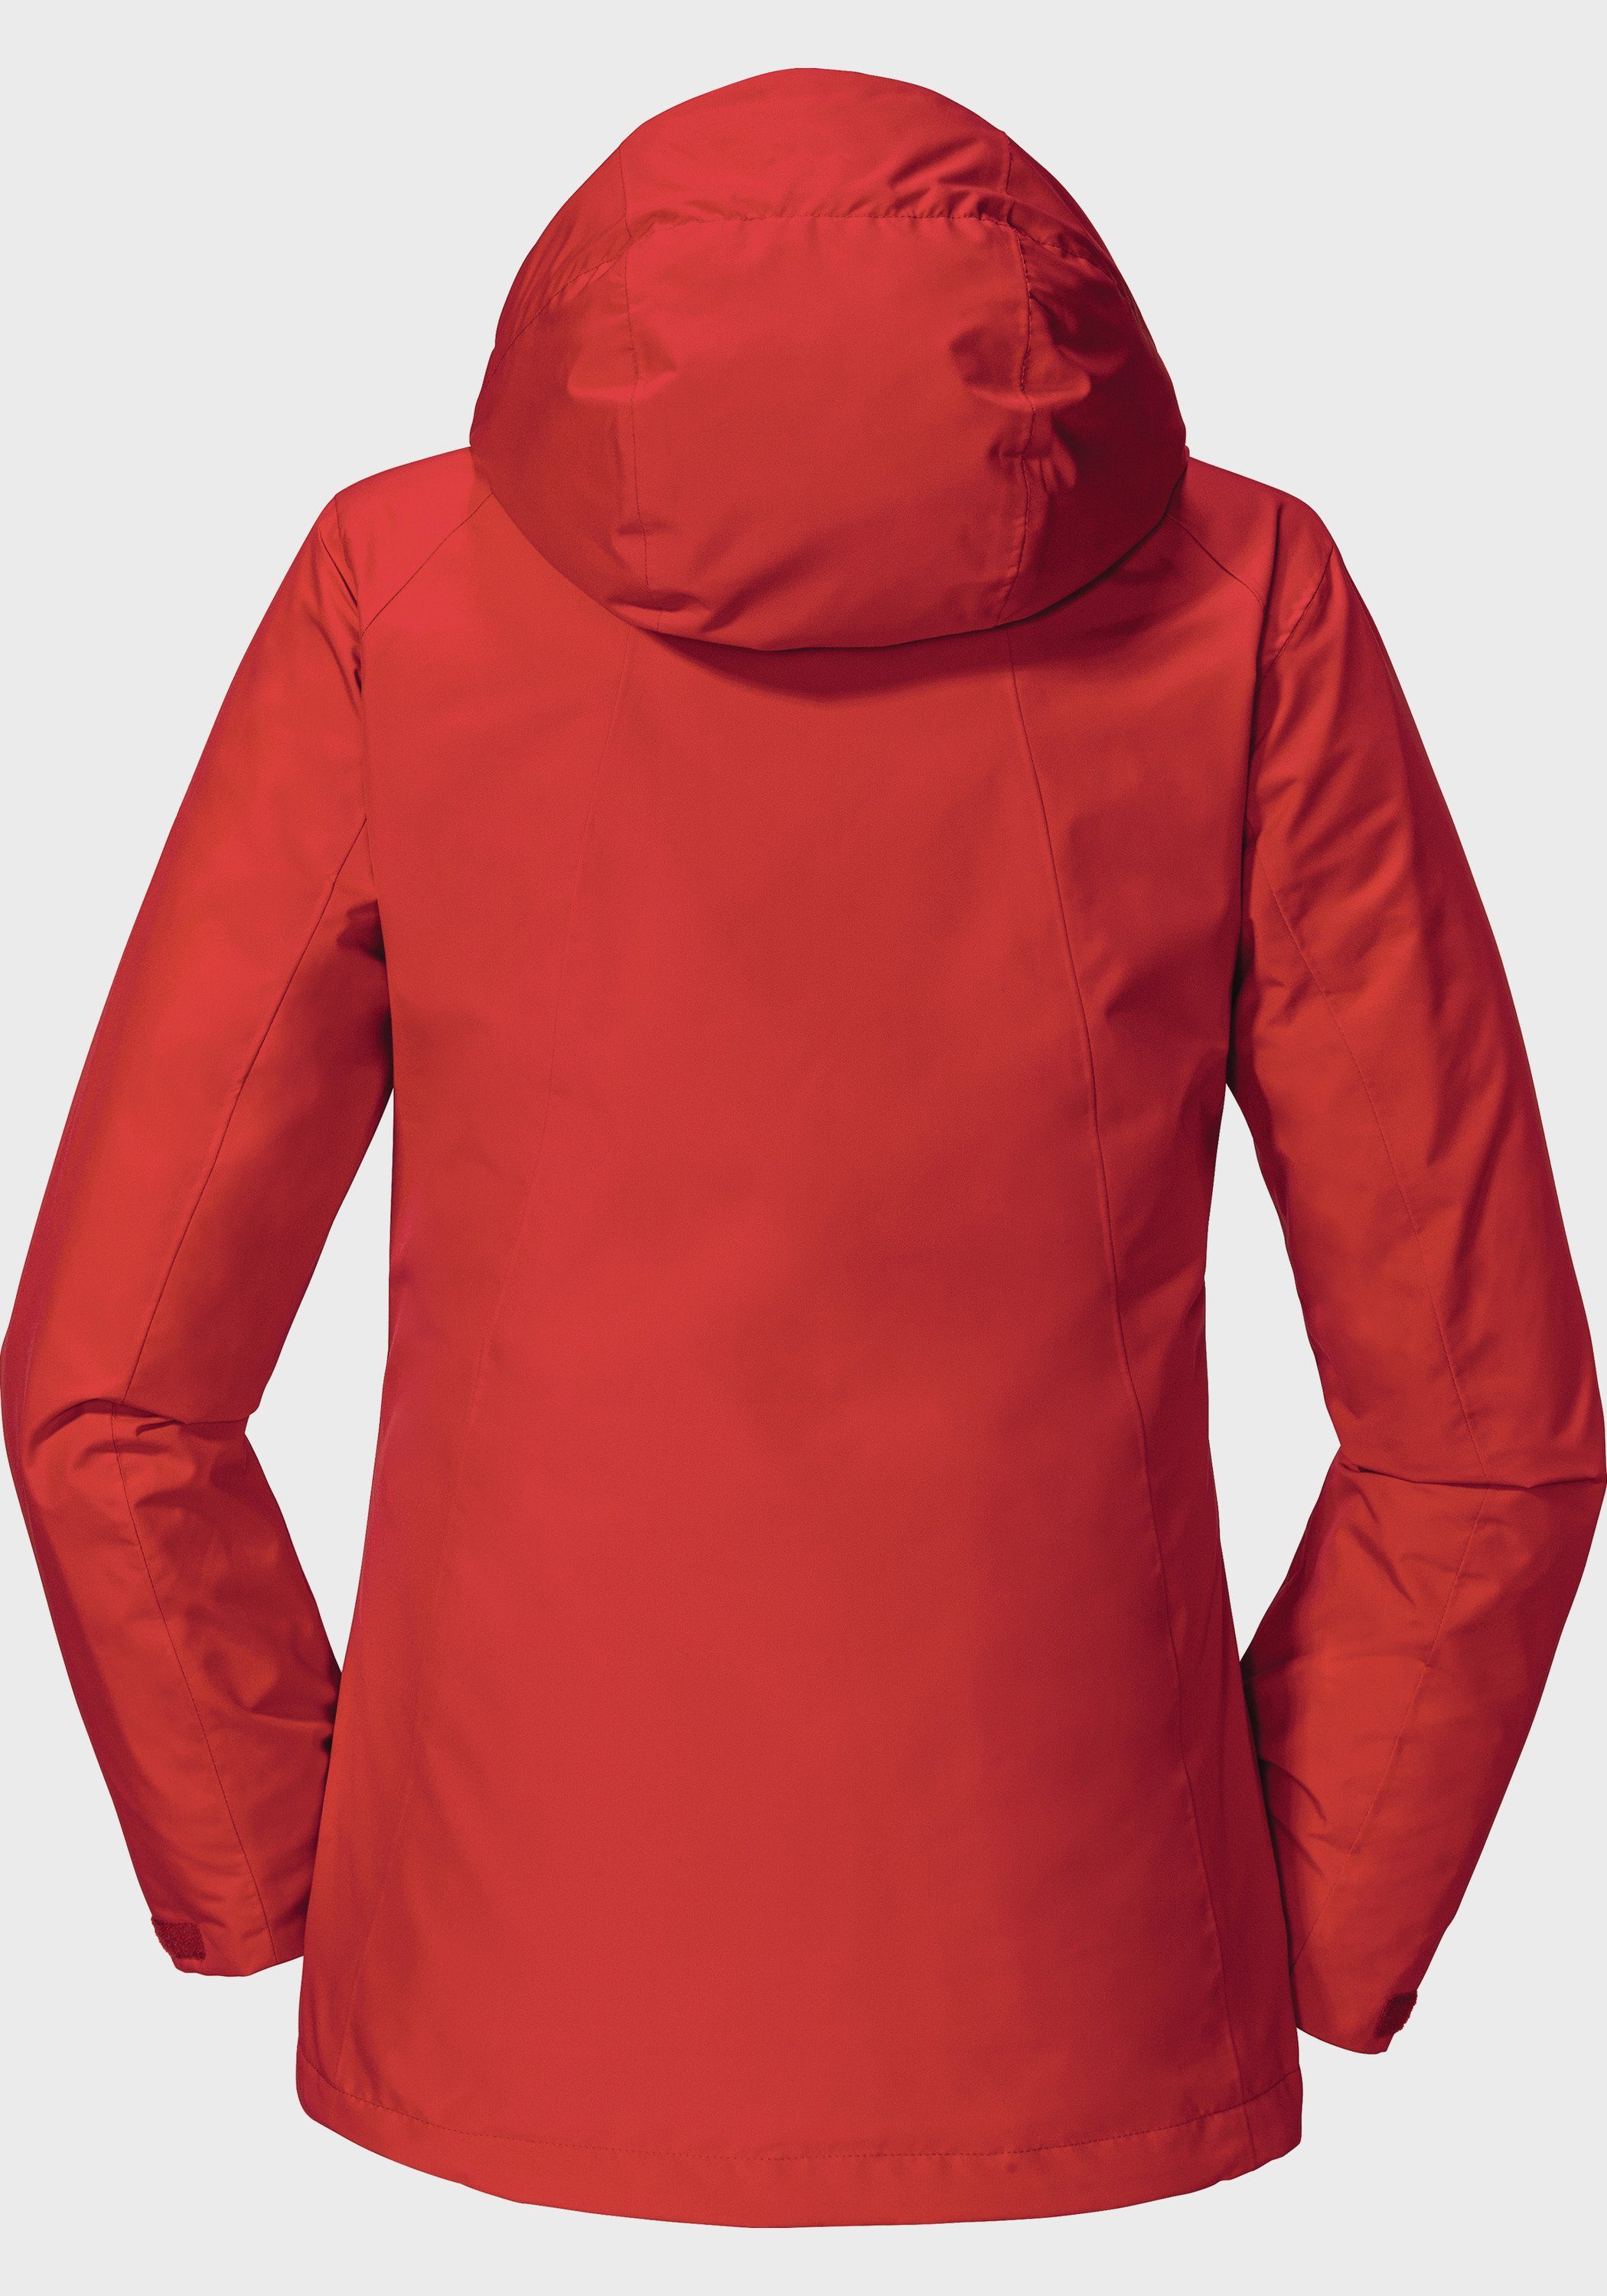 Partinello L Jacket rosa Doppeljacke Schöffel 3in1